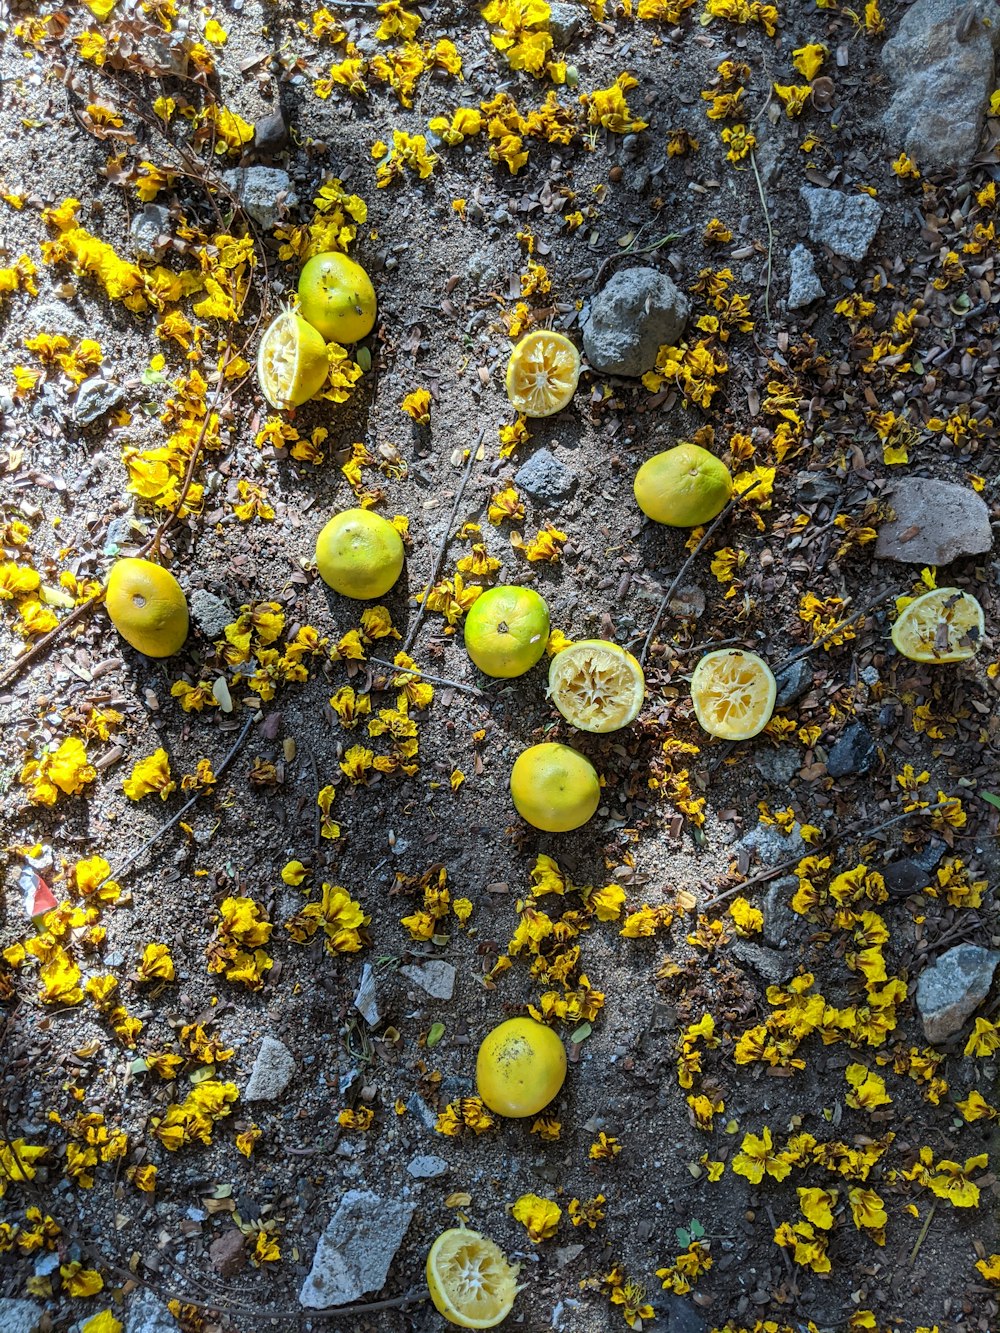 yellow round fruits on ground